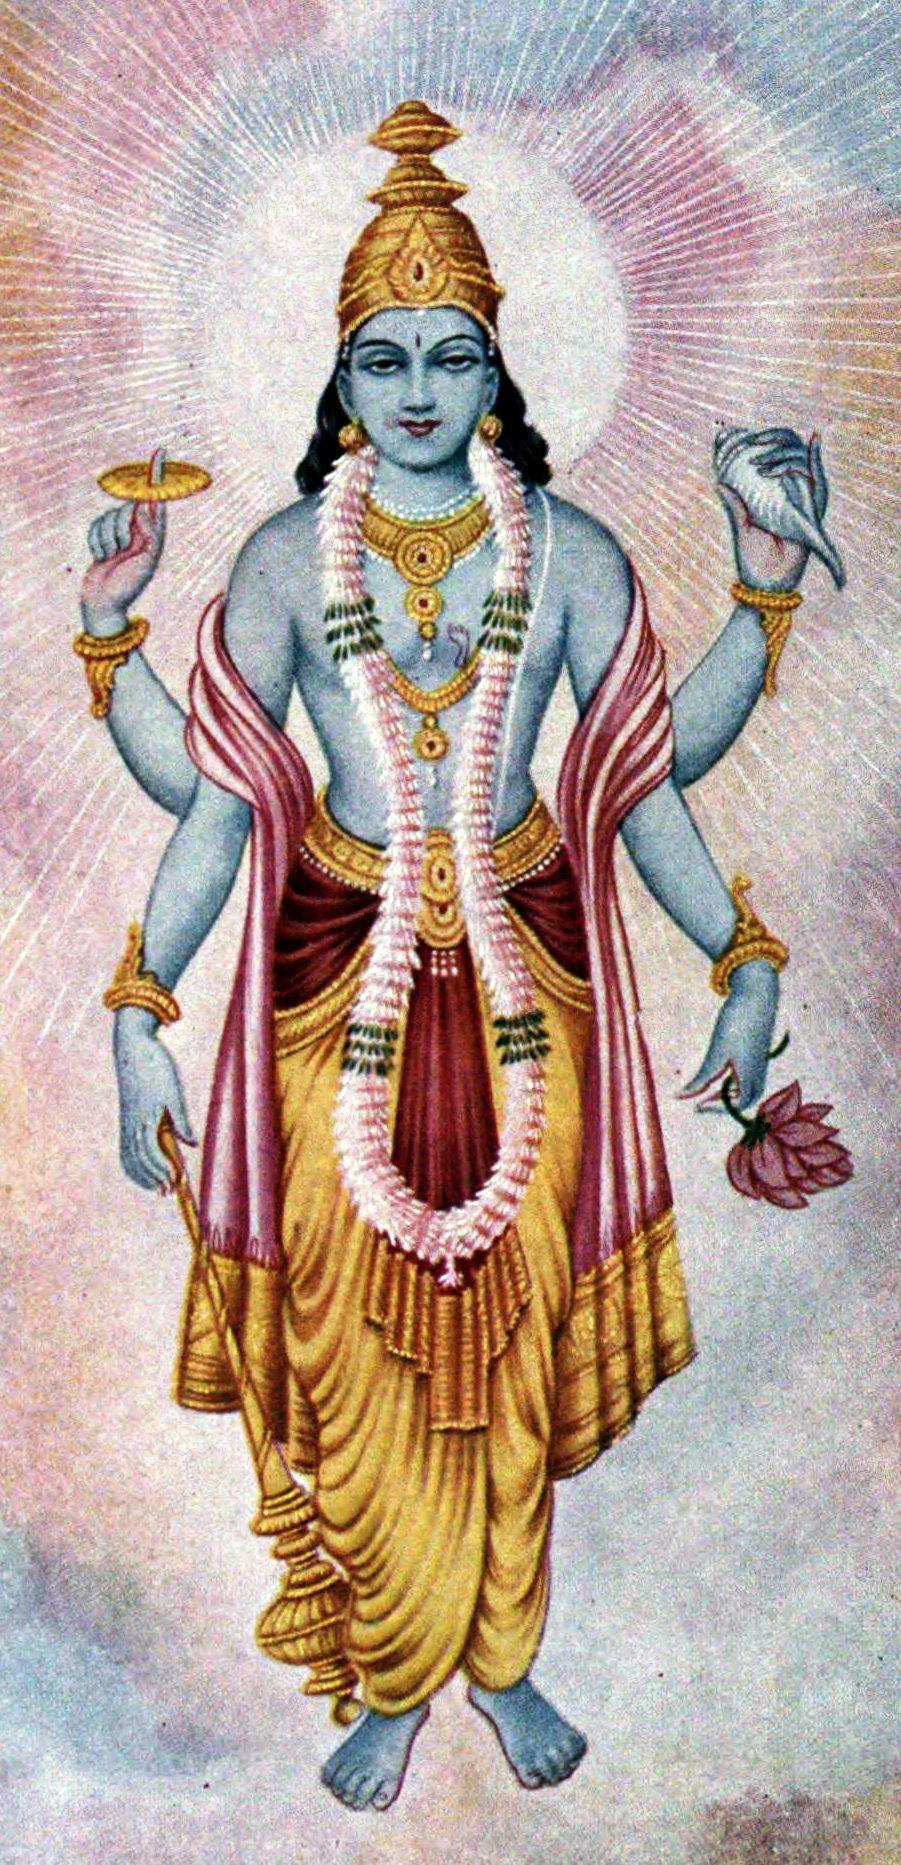 Vishnu Preserve and protects the universe